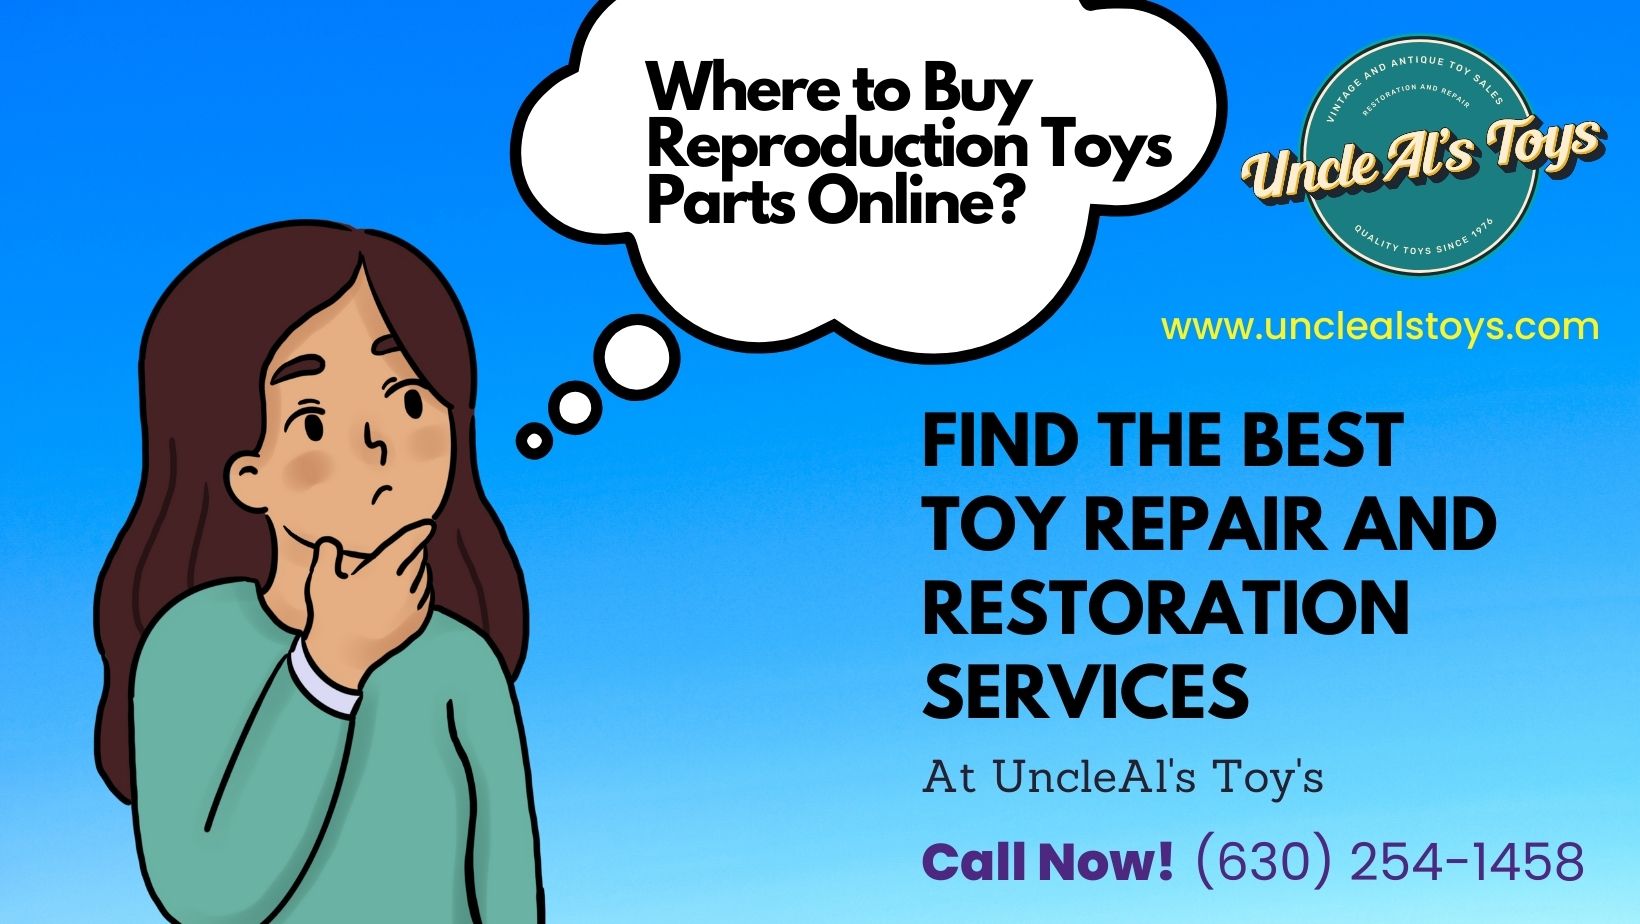 Where to Buy Reproduction Toys Parts Online - Uncle Al's Toys - Uncle Al's Toys